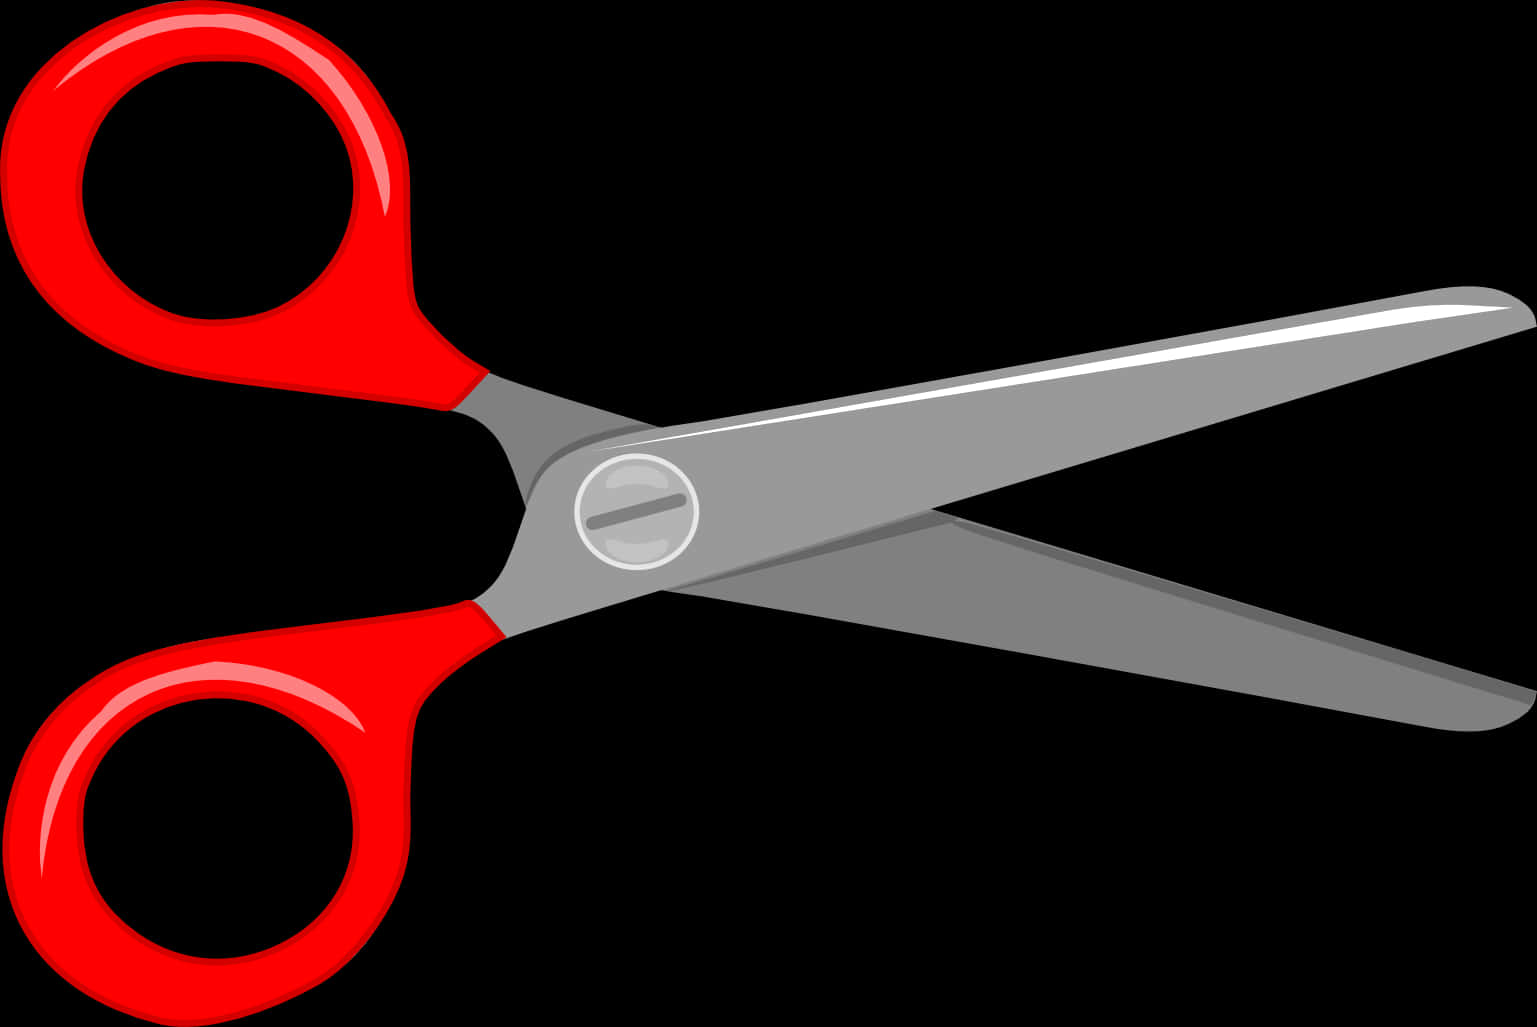 Red Handled Scissors Vector PNG